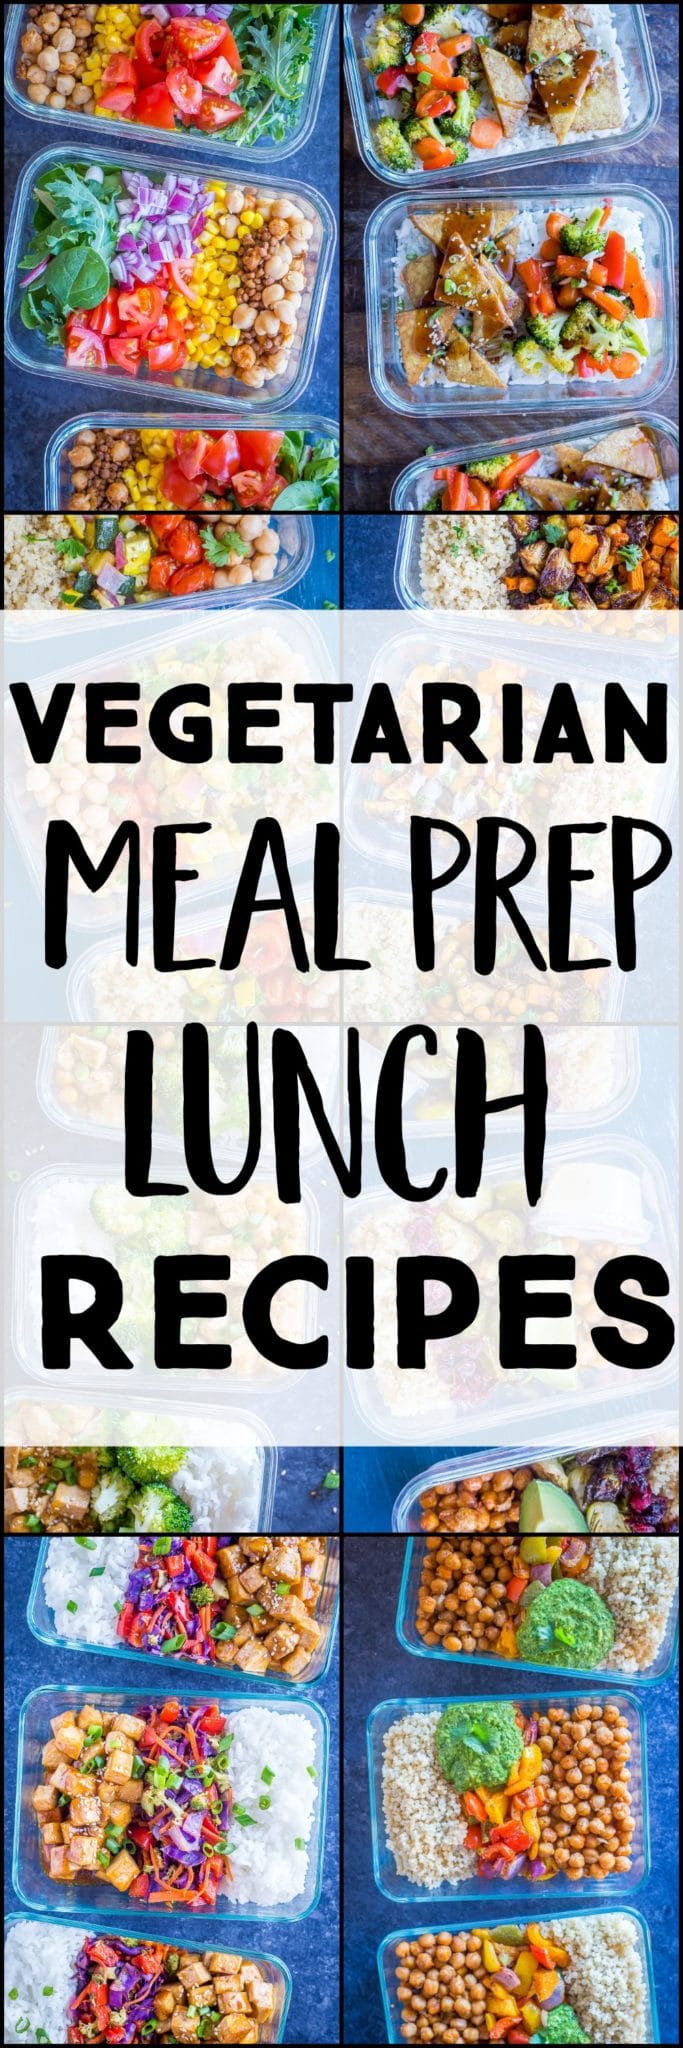 32 Healthy Vegetarian Meal Prep Recipes - She Likes Food